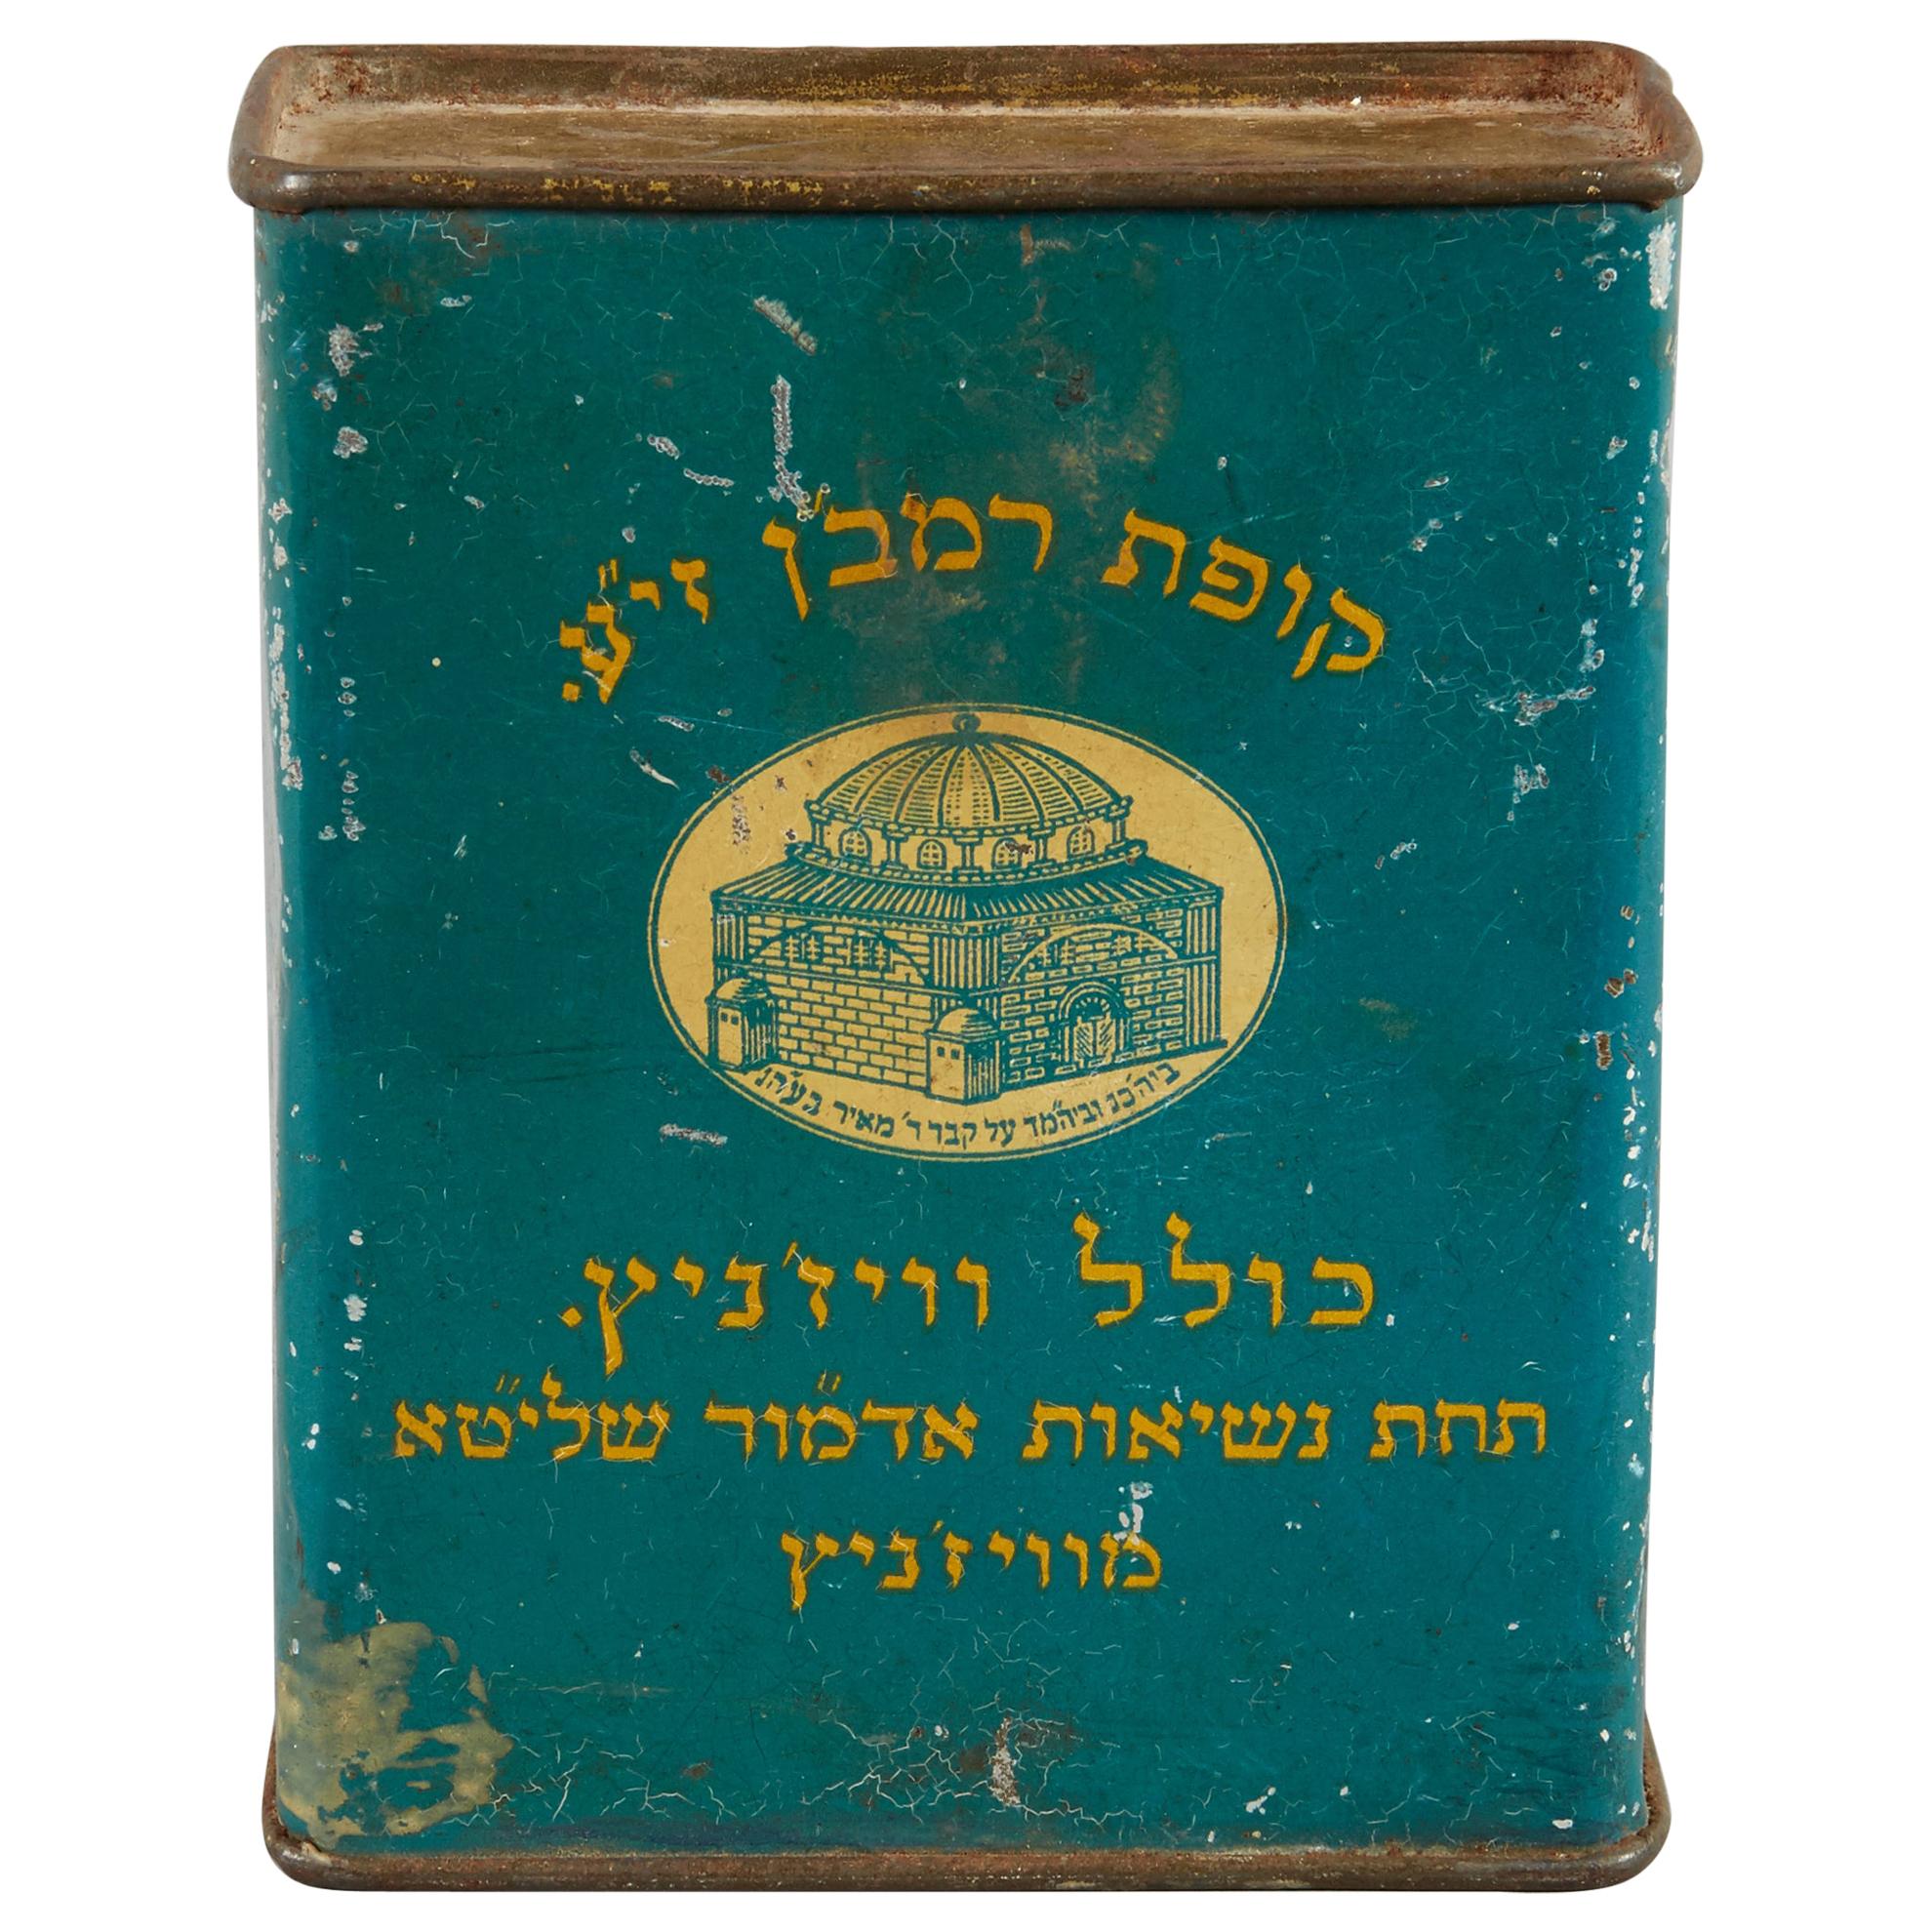 Erez Israel Tin Charity Box by Alfred Zaltsman